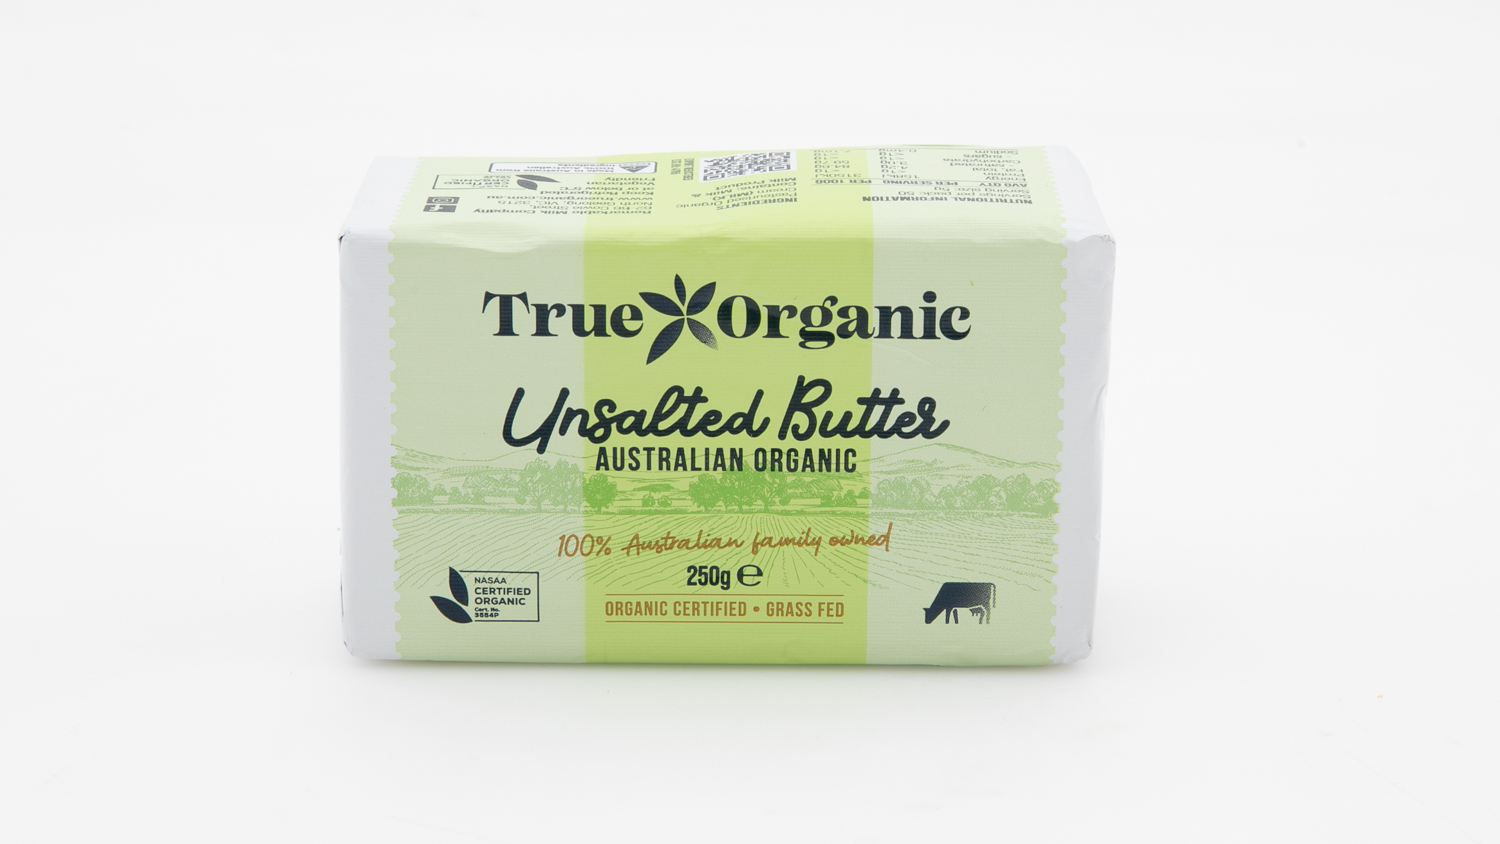 True Organic Australian Organic Unsalted Butter carousel image